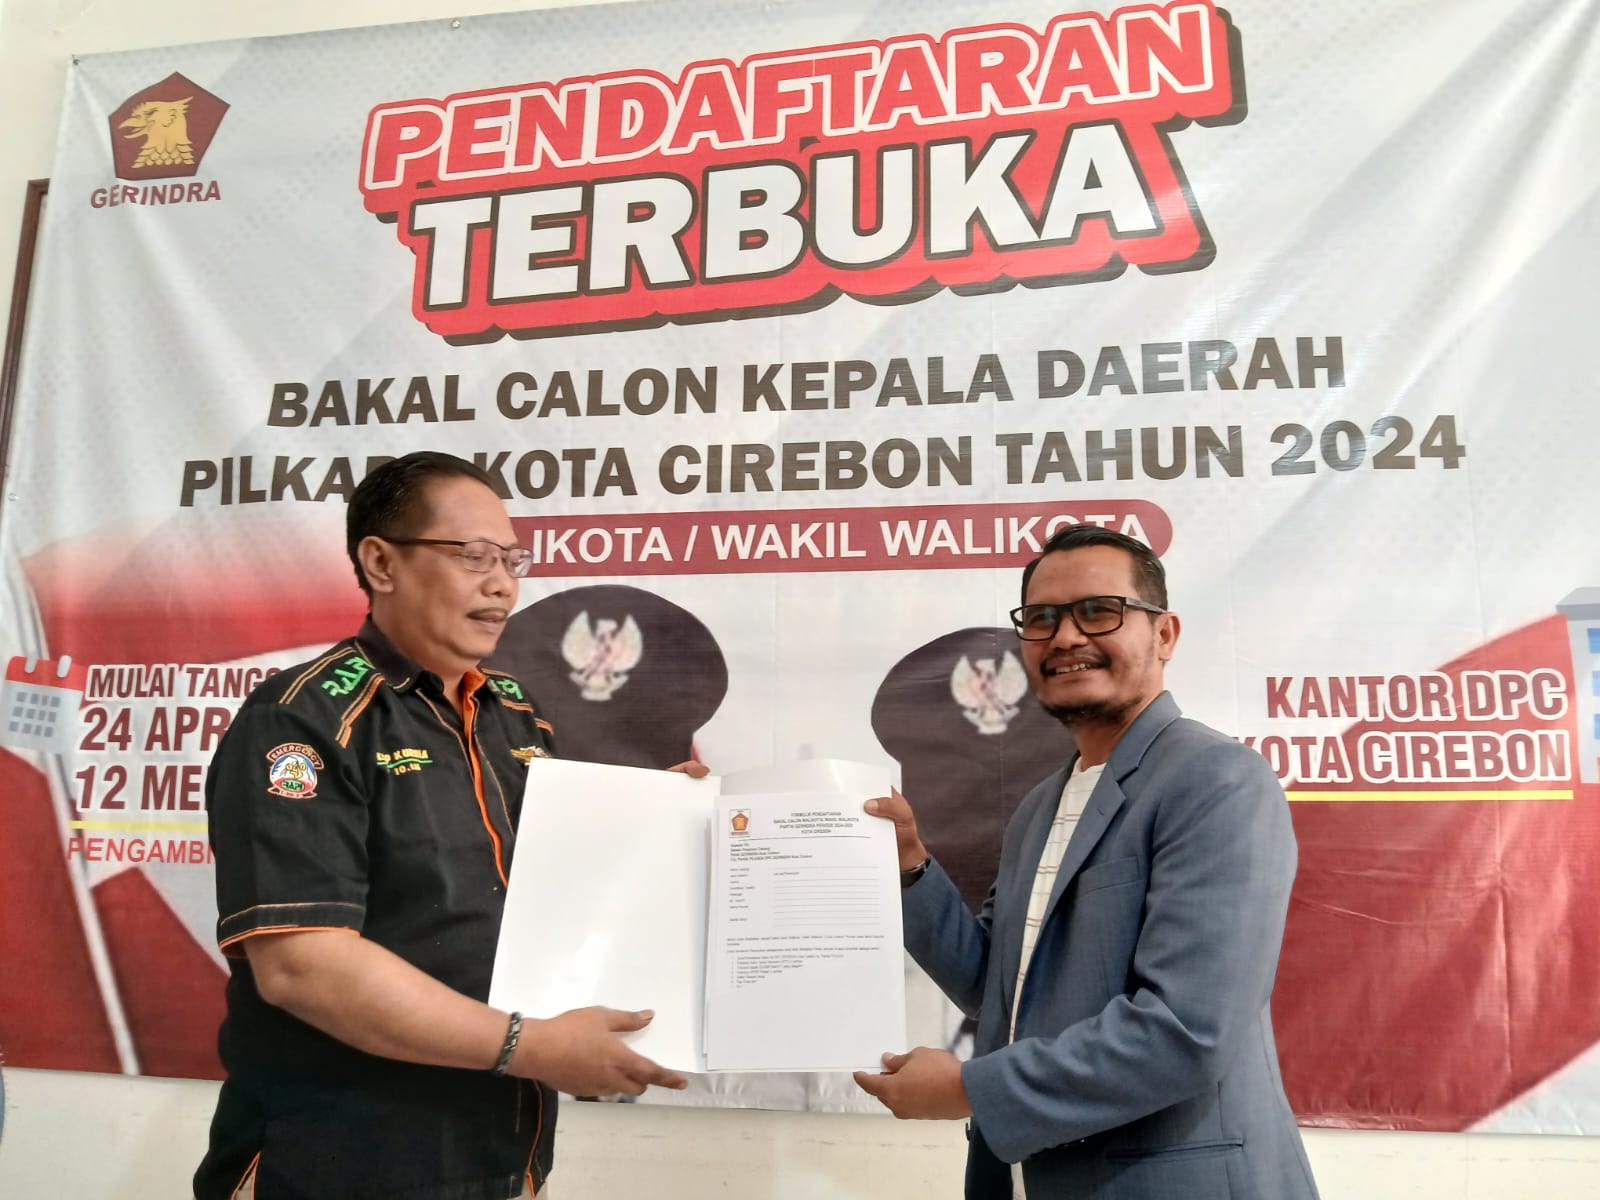 Bawa Visi Nasional ke Kota Cirebon, Furqon Nurzaman Mendaftar ke Gerindra